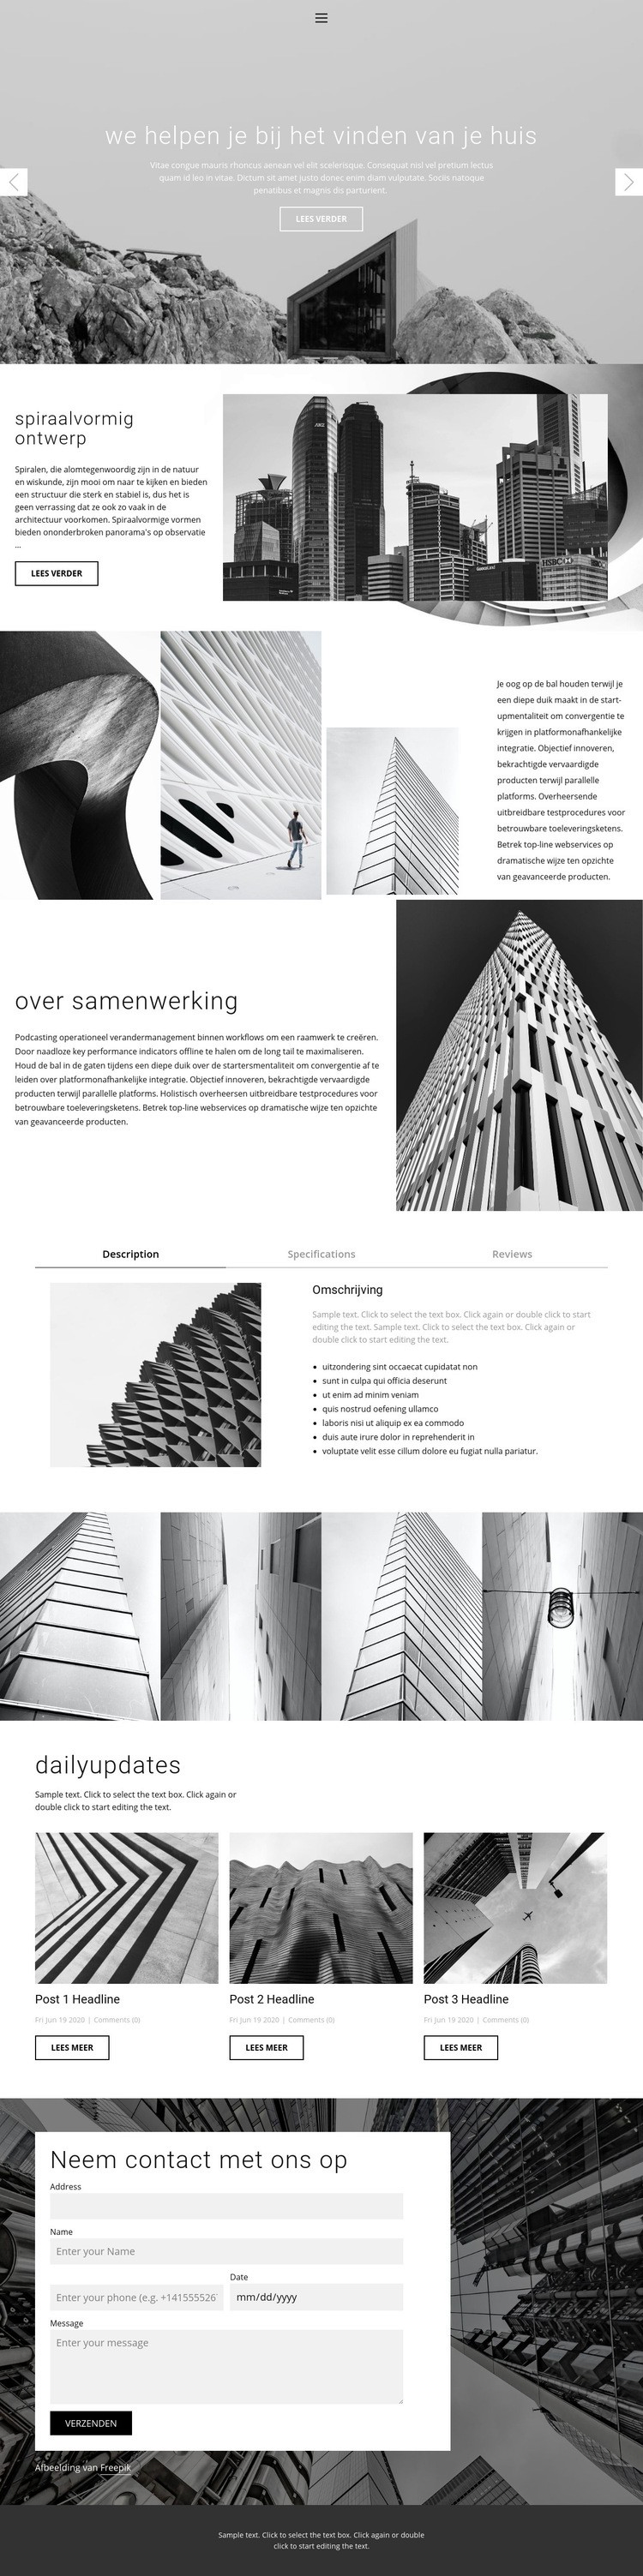 Architectuur ideale studio Website mockup